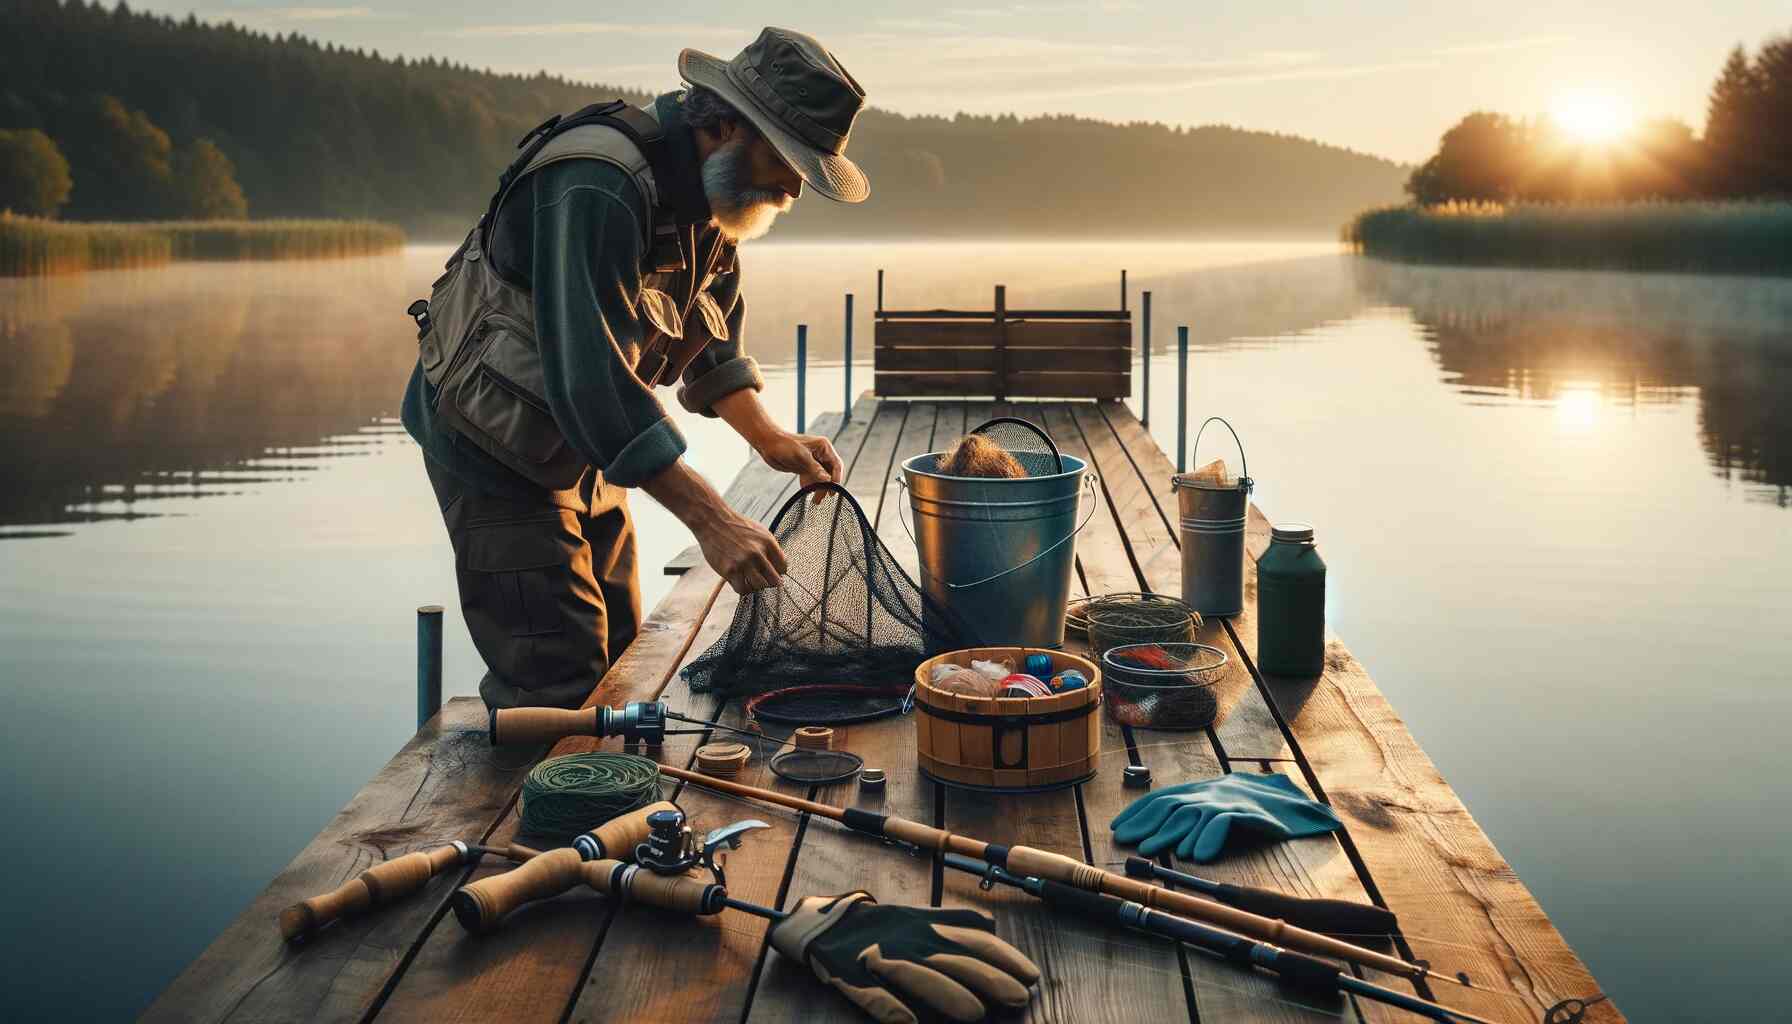 An angler preparing their fishing equipment on a dock beside a calm lake at sunrise.